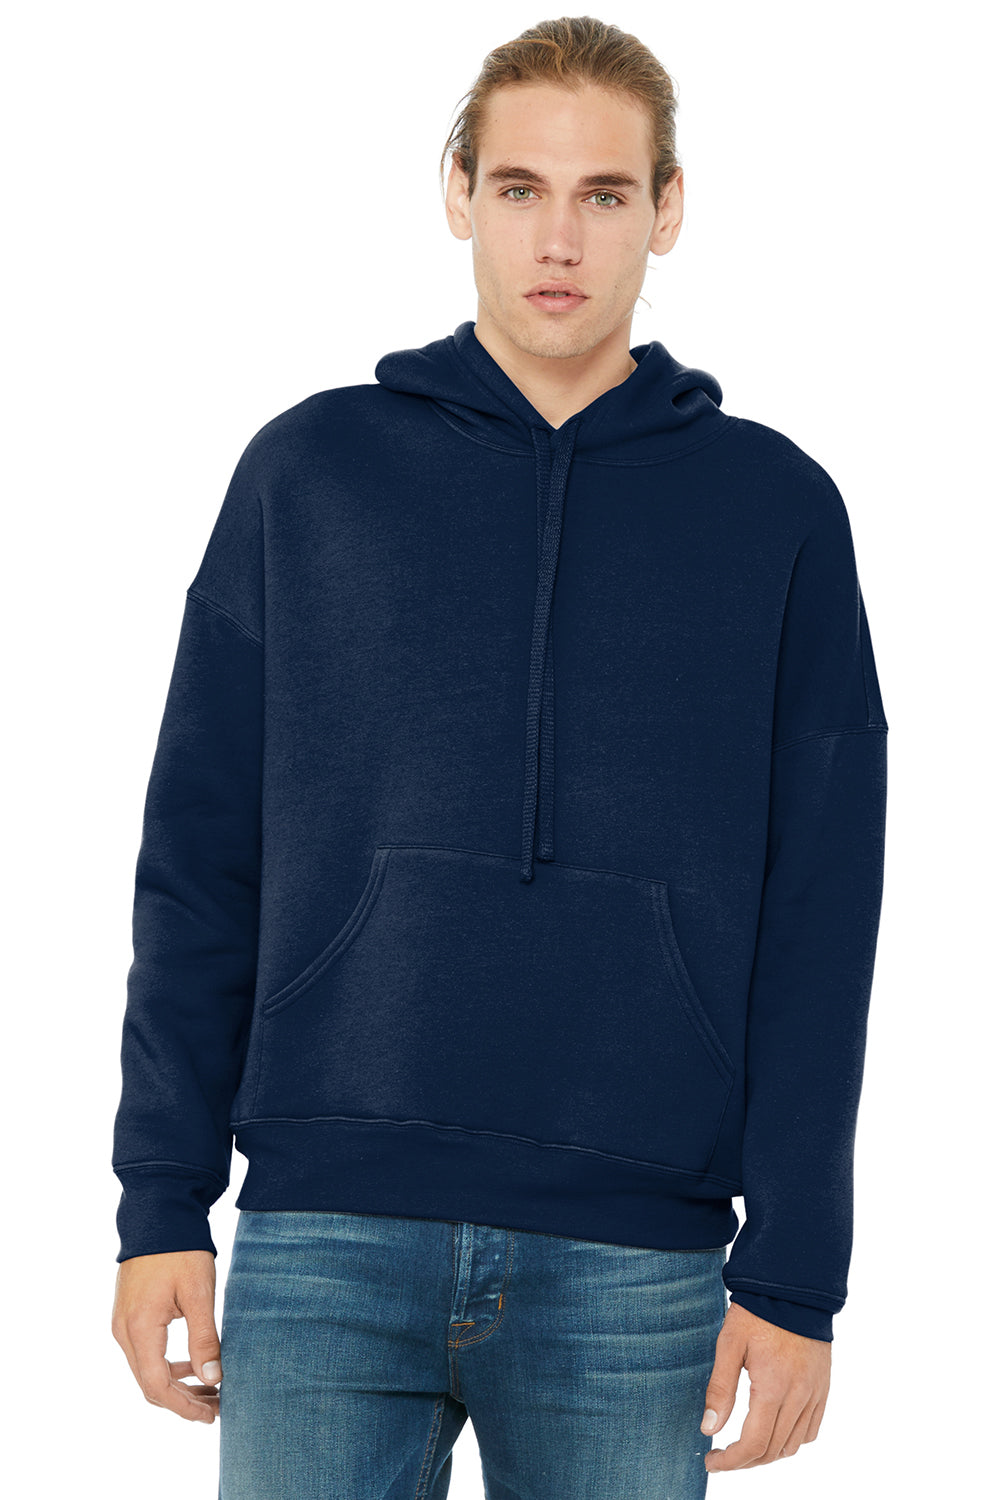 Bella + Canvas BC3729/3729 Mens Sponge Fleece Hooded Sweatshirt Hoodie Navy Blue Model Front